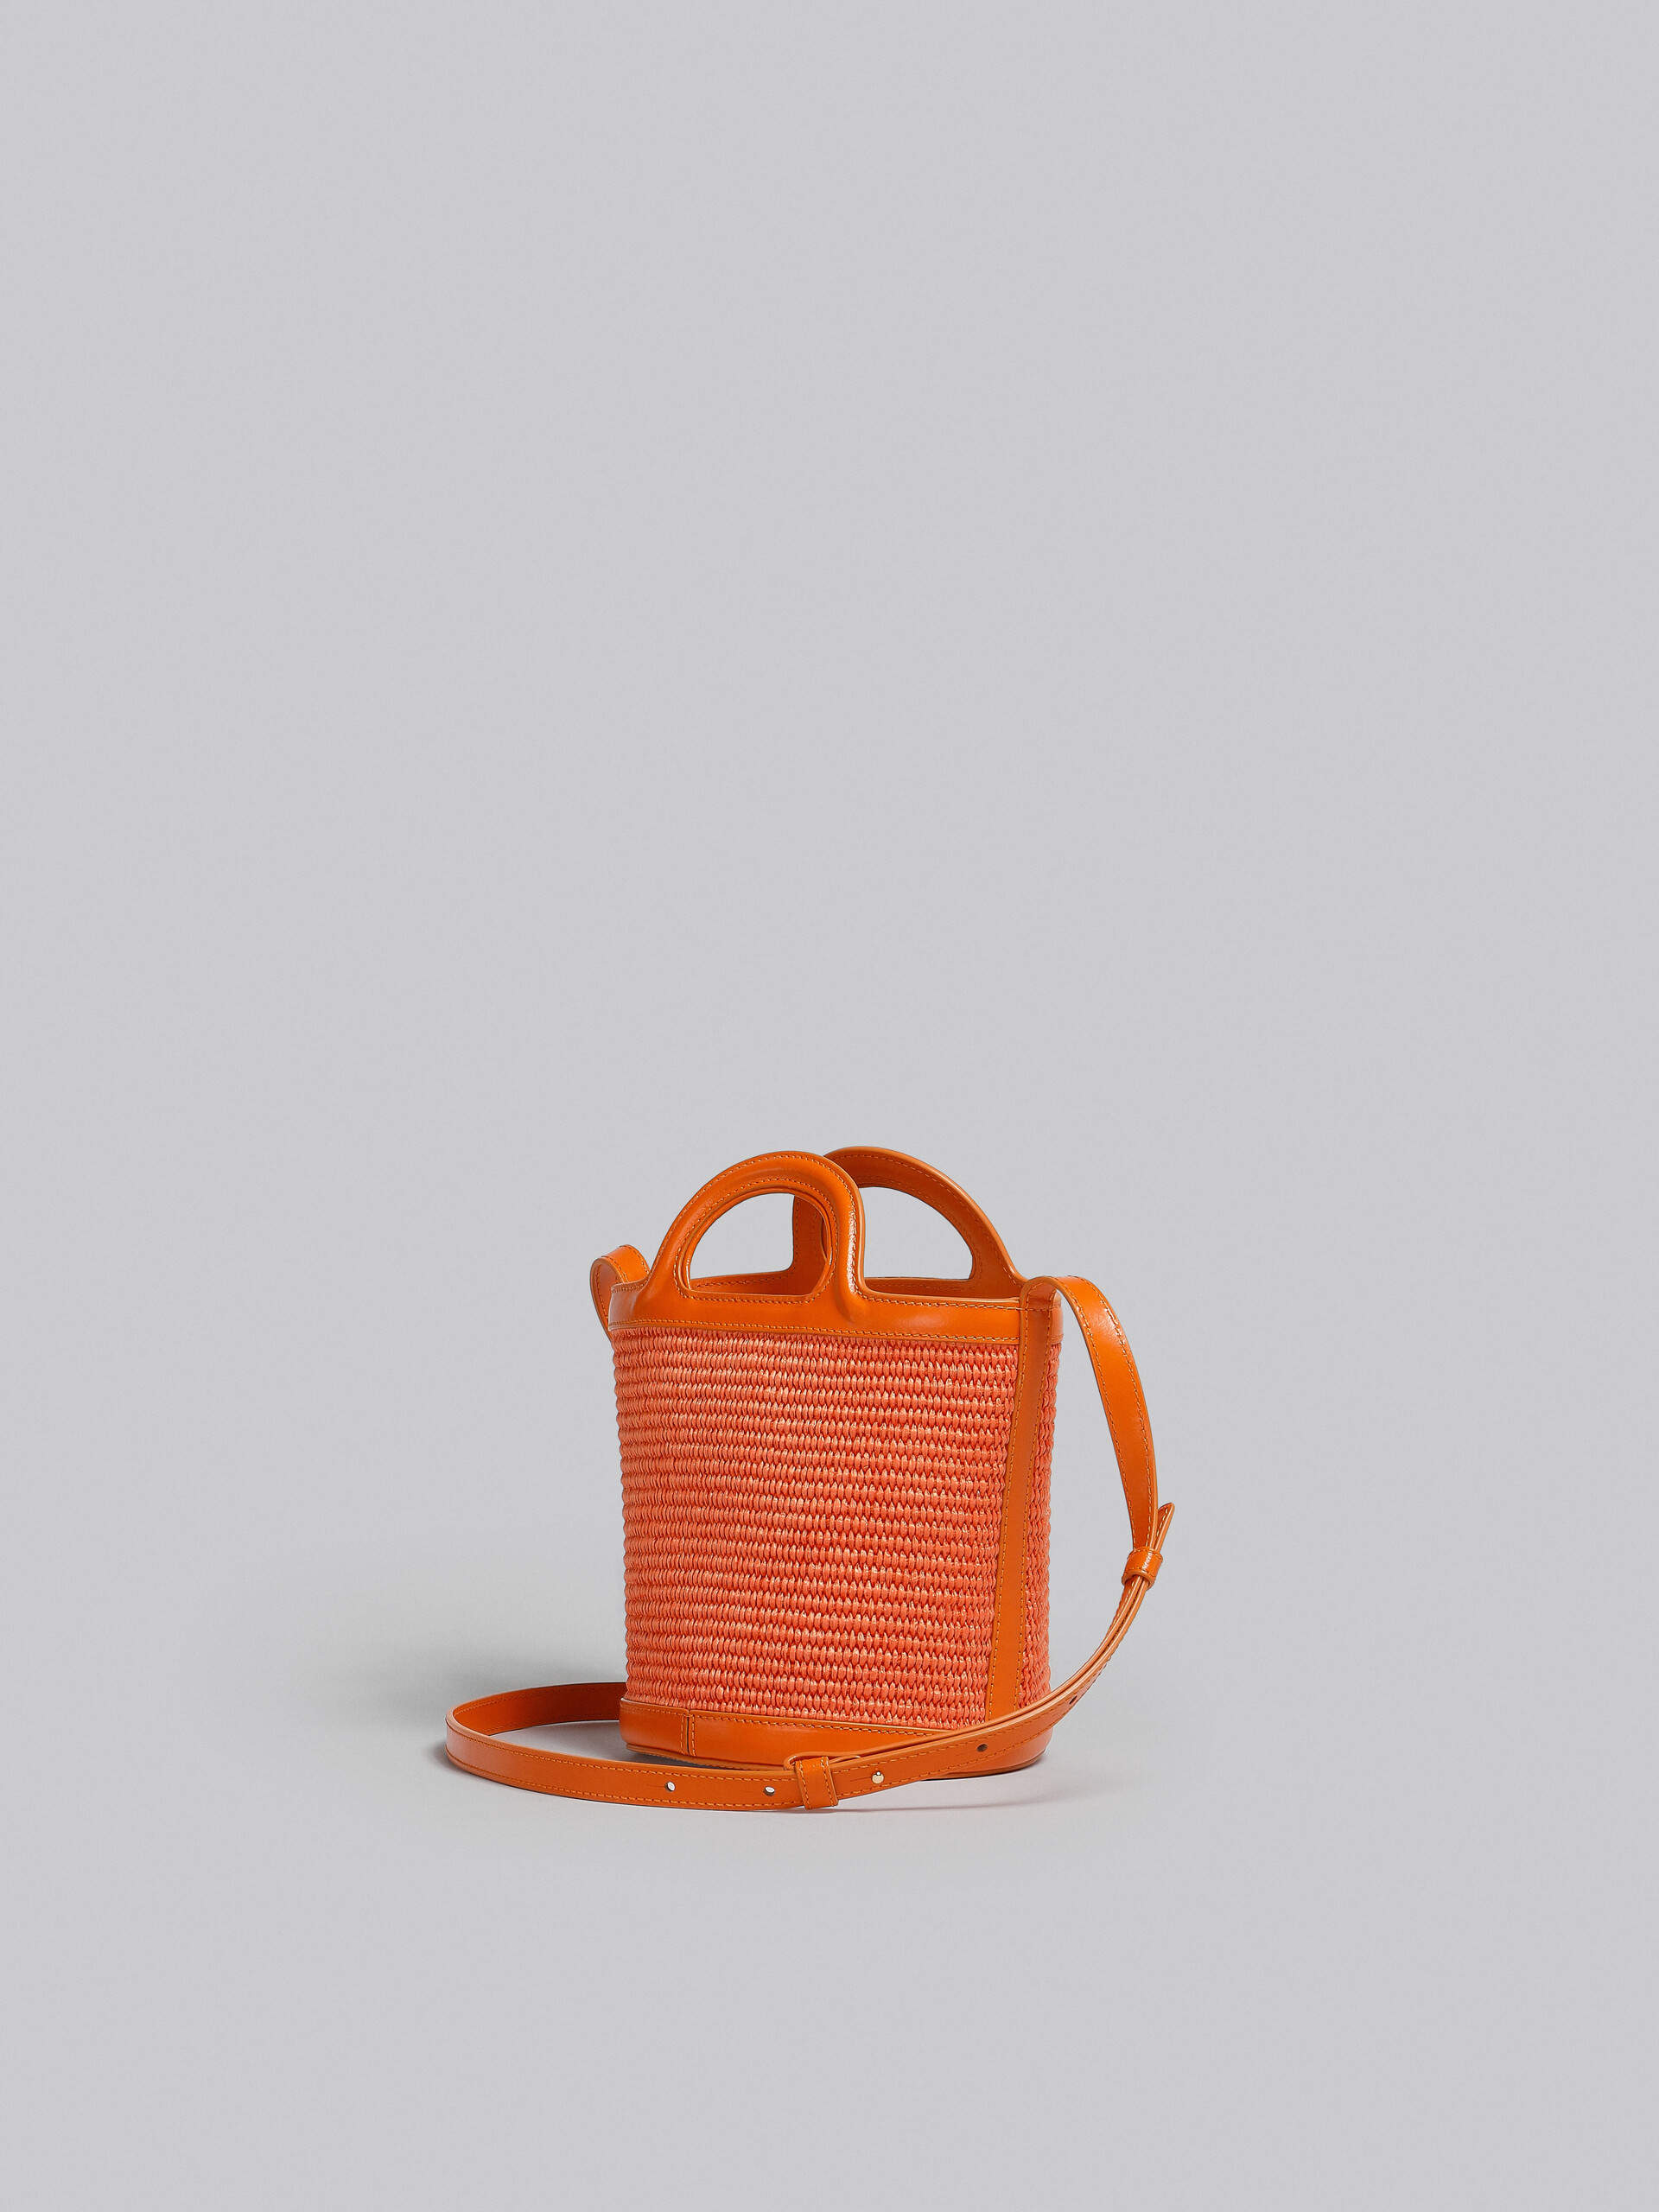 Tropicalia Small Bucket Bag in orange leather and raffia - Shoulder Bag - Image 3